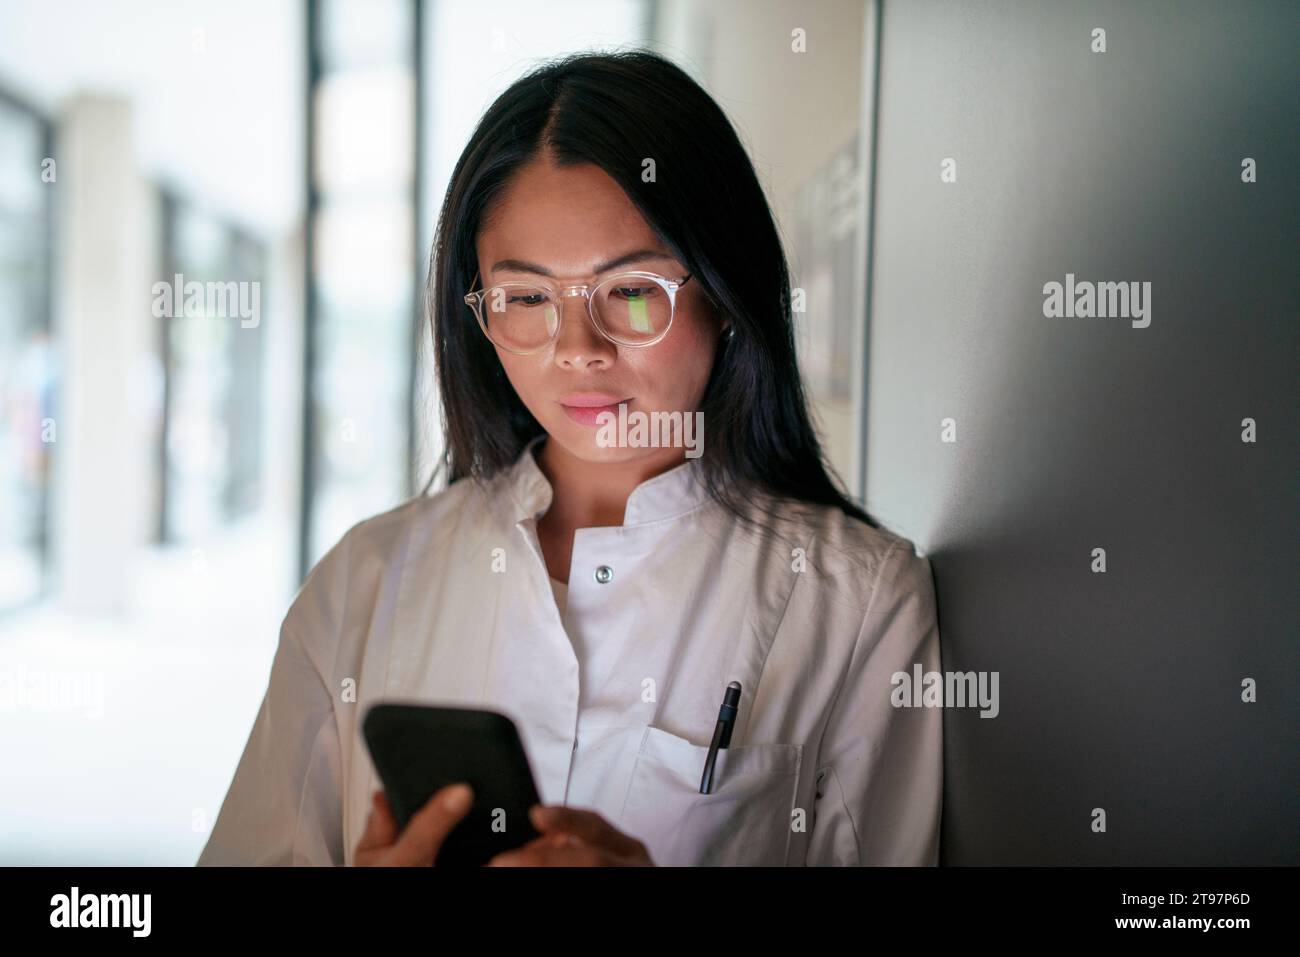 Scientist wearing eyeglasses and using smart phone in corridor Stock Photo